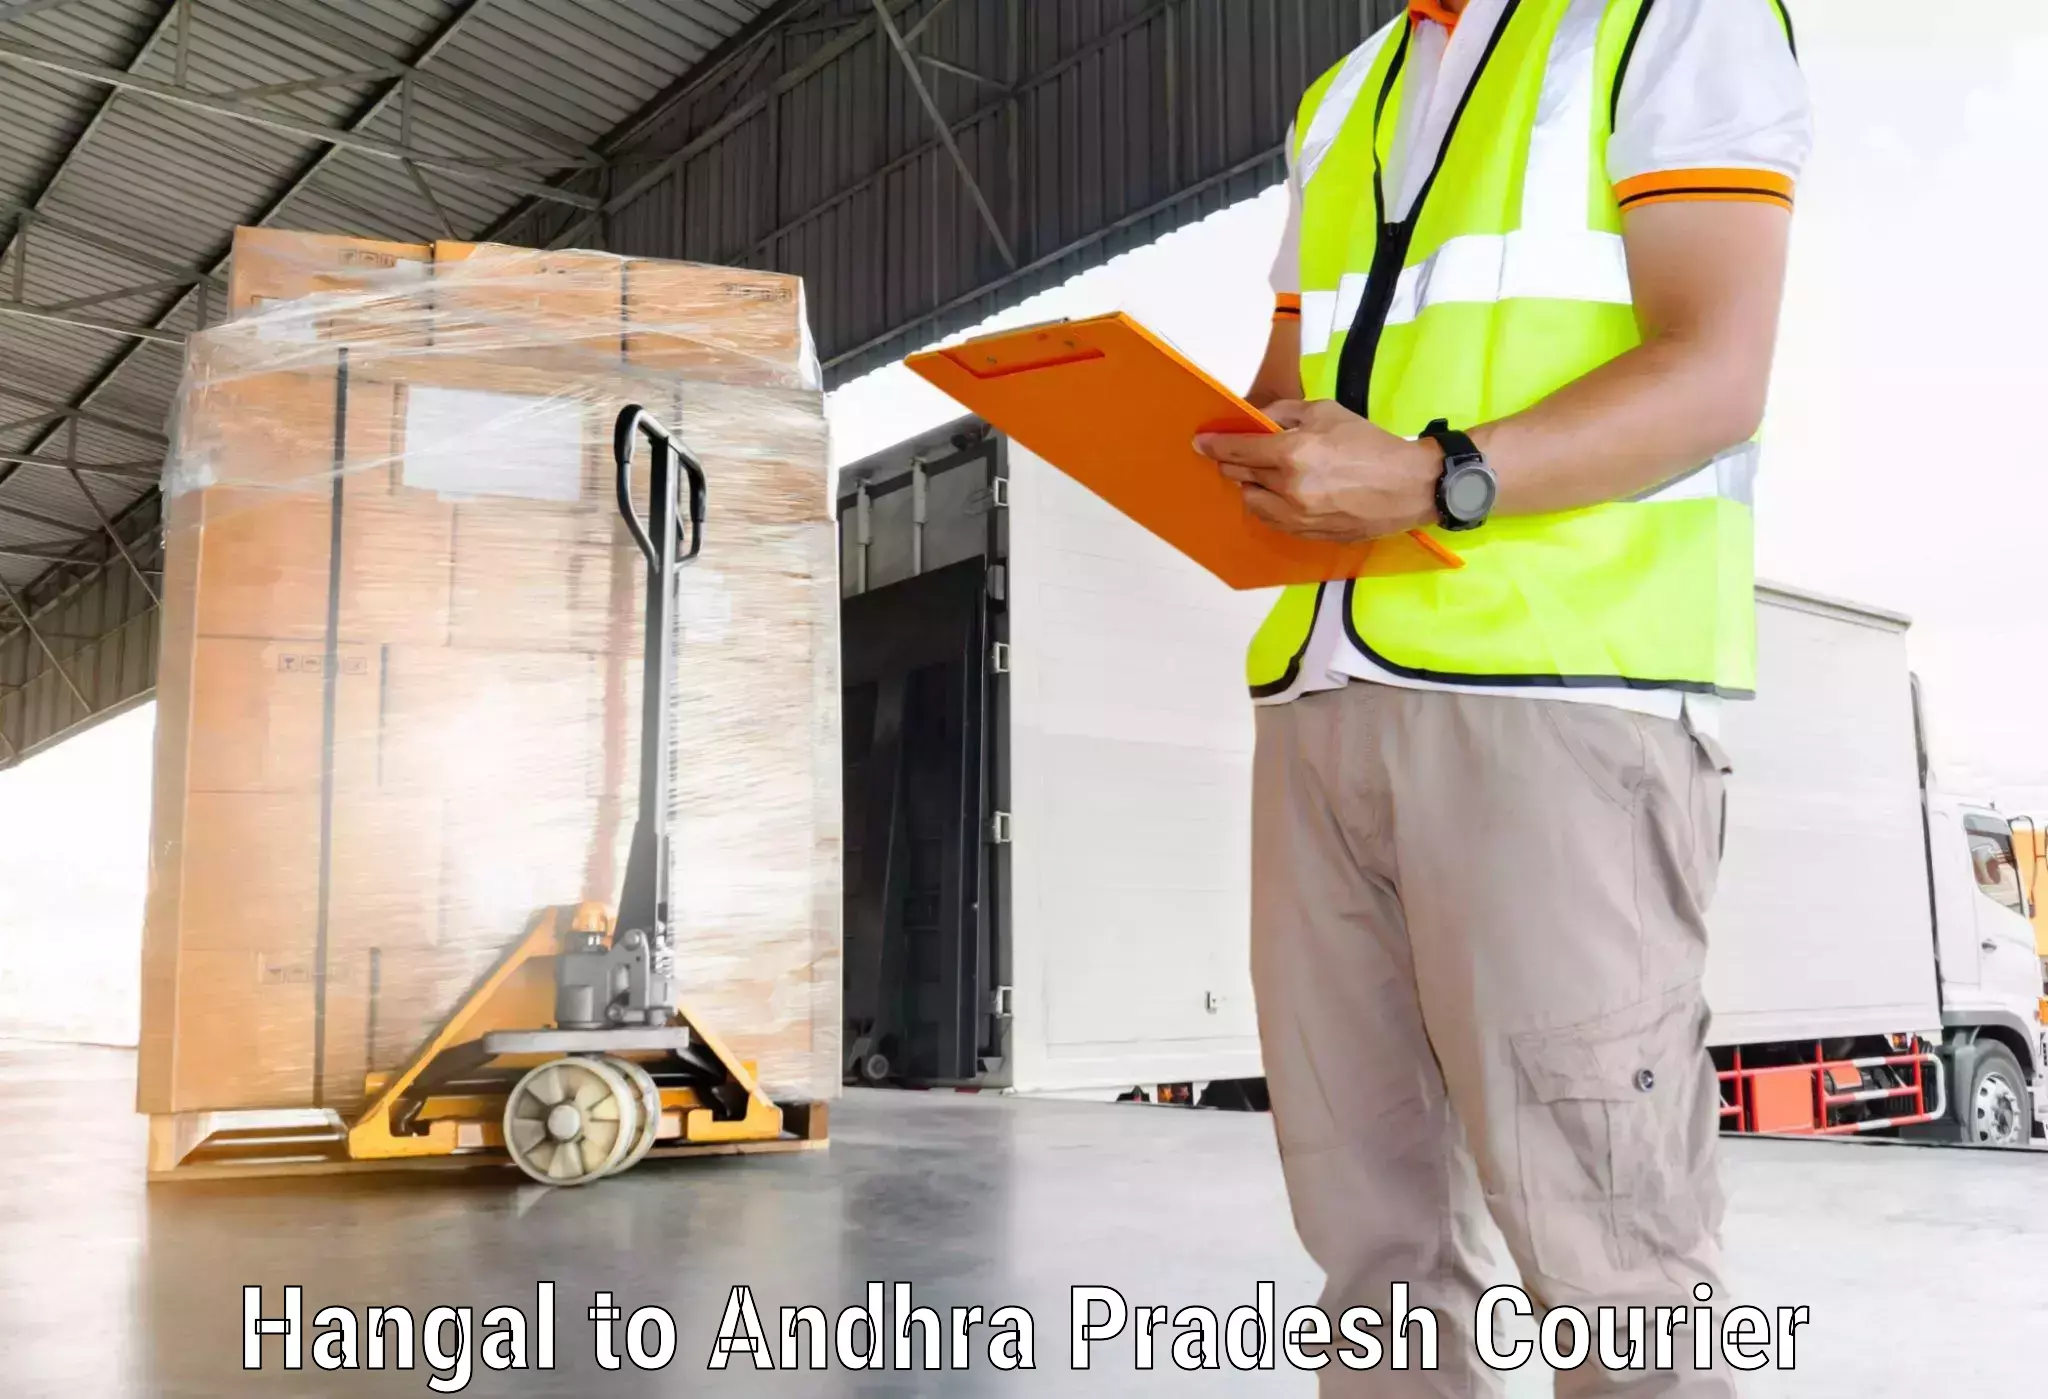 Courier service efficiency Hangal to Kondapi